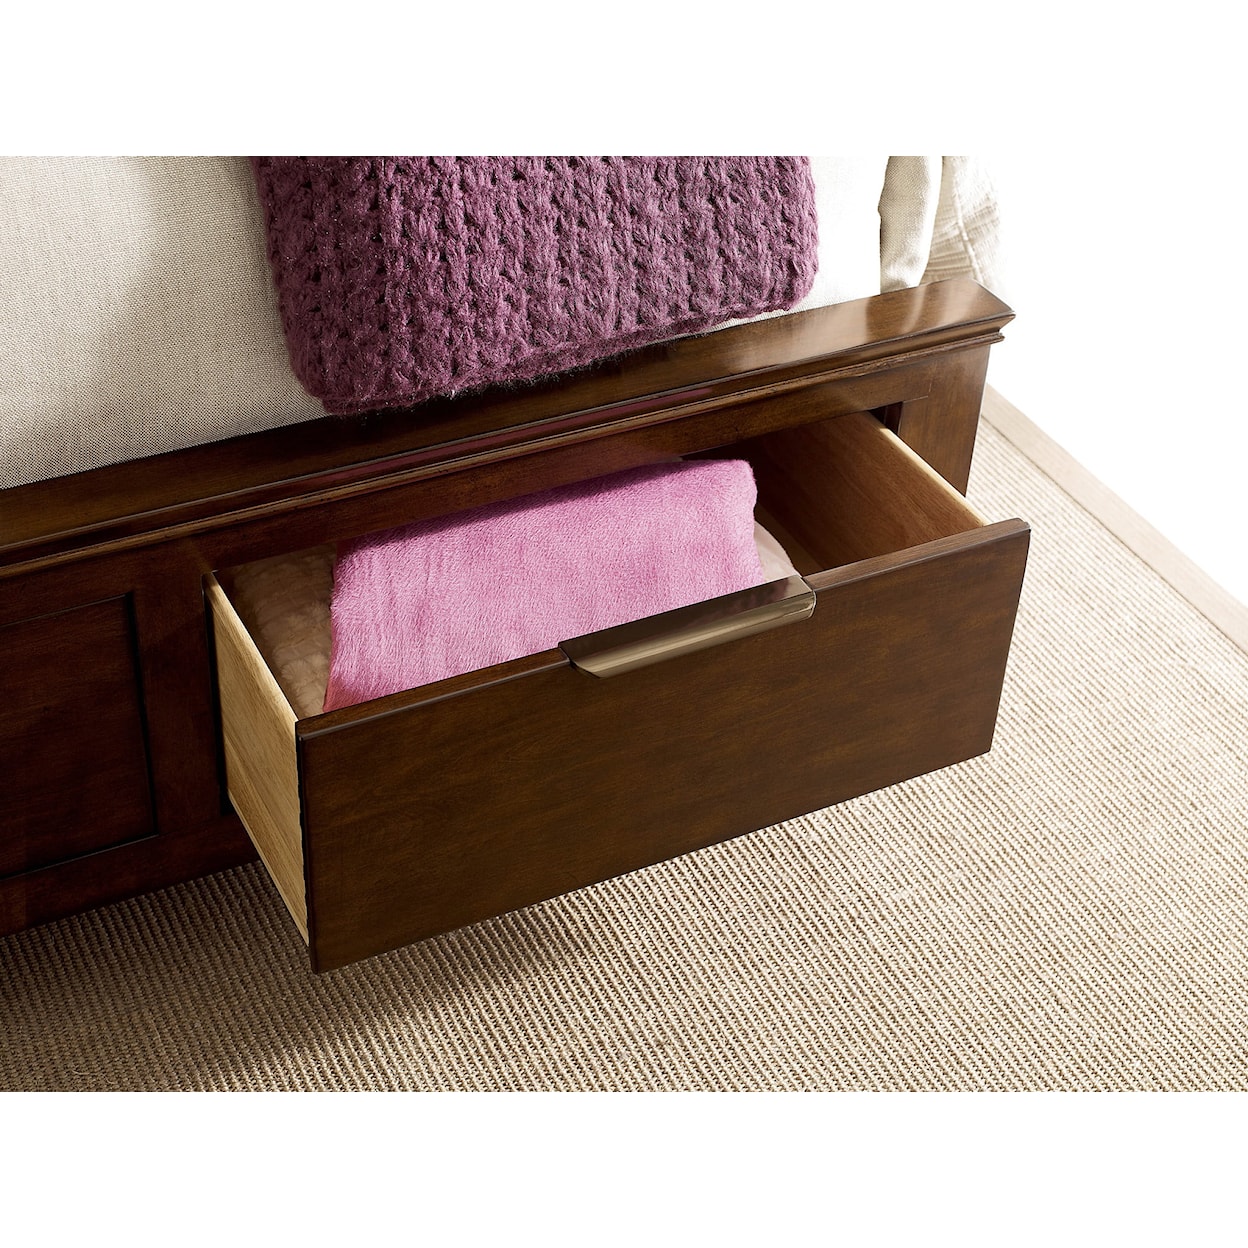 Kincaid Furniture Elise Spectrum Queen Storage Bed - Complete